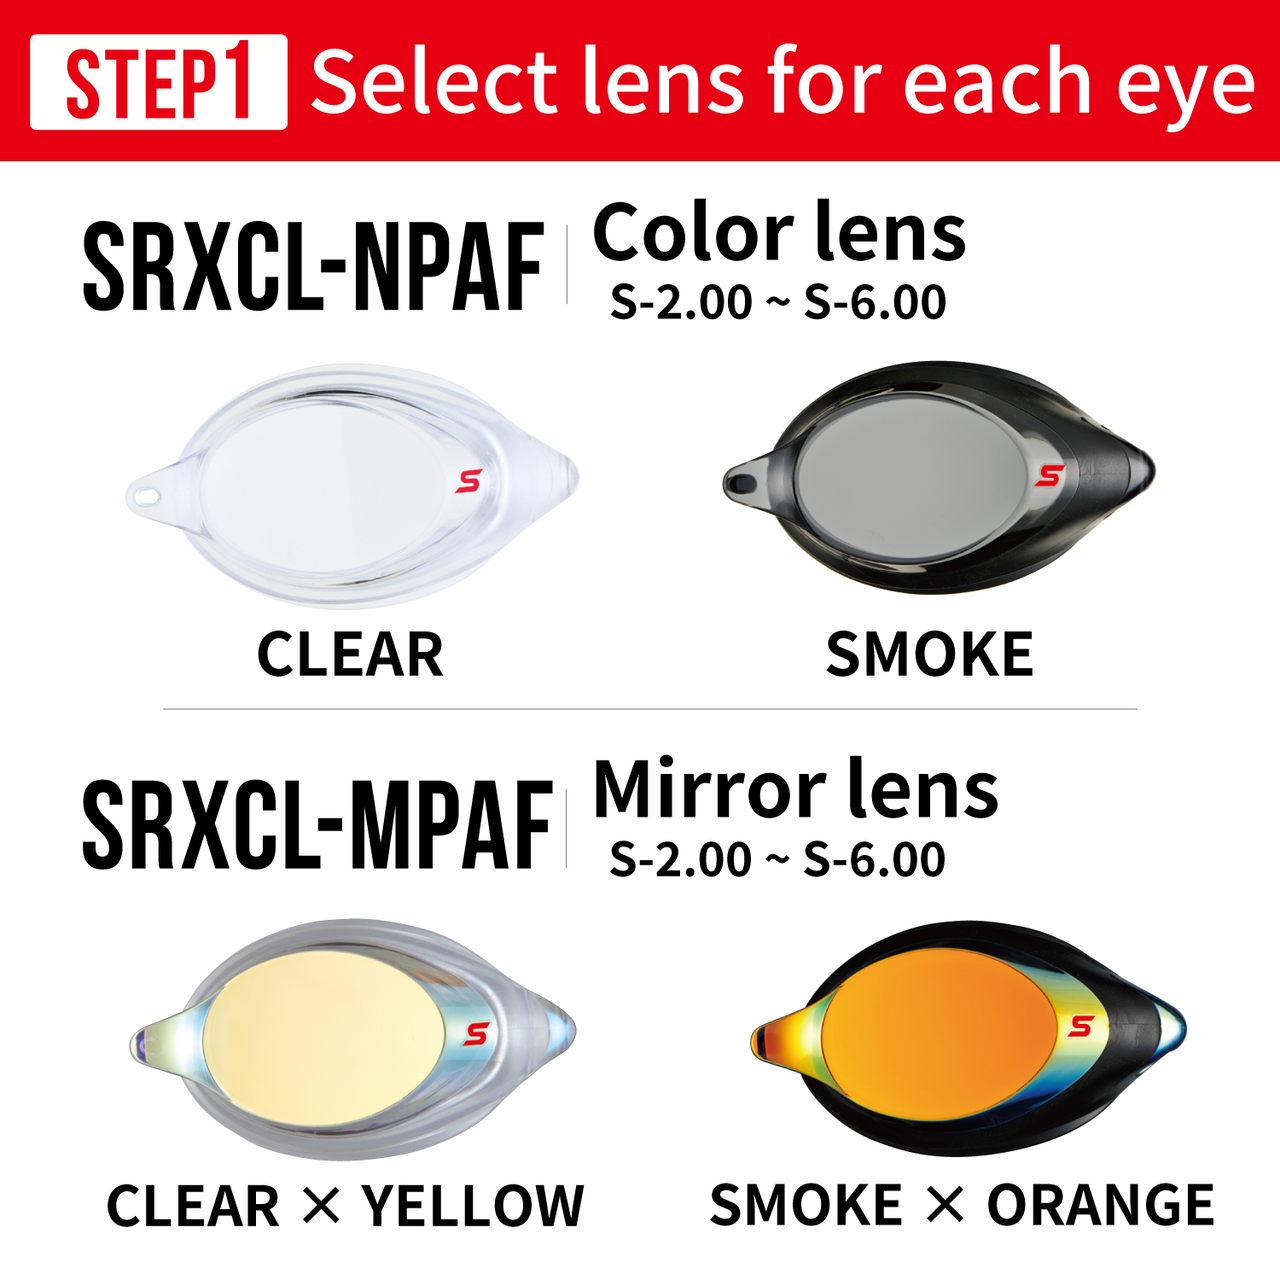 SWANS SRXCL-MPAF S-4.00 SMOR Smoke Lens x Orange Mirror SWIM GOGGLE,Opt2, large image number 1